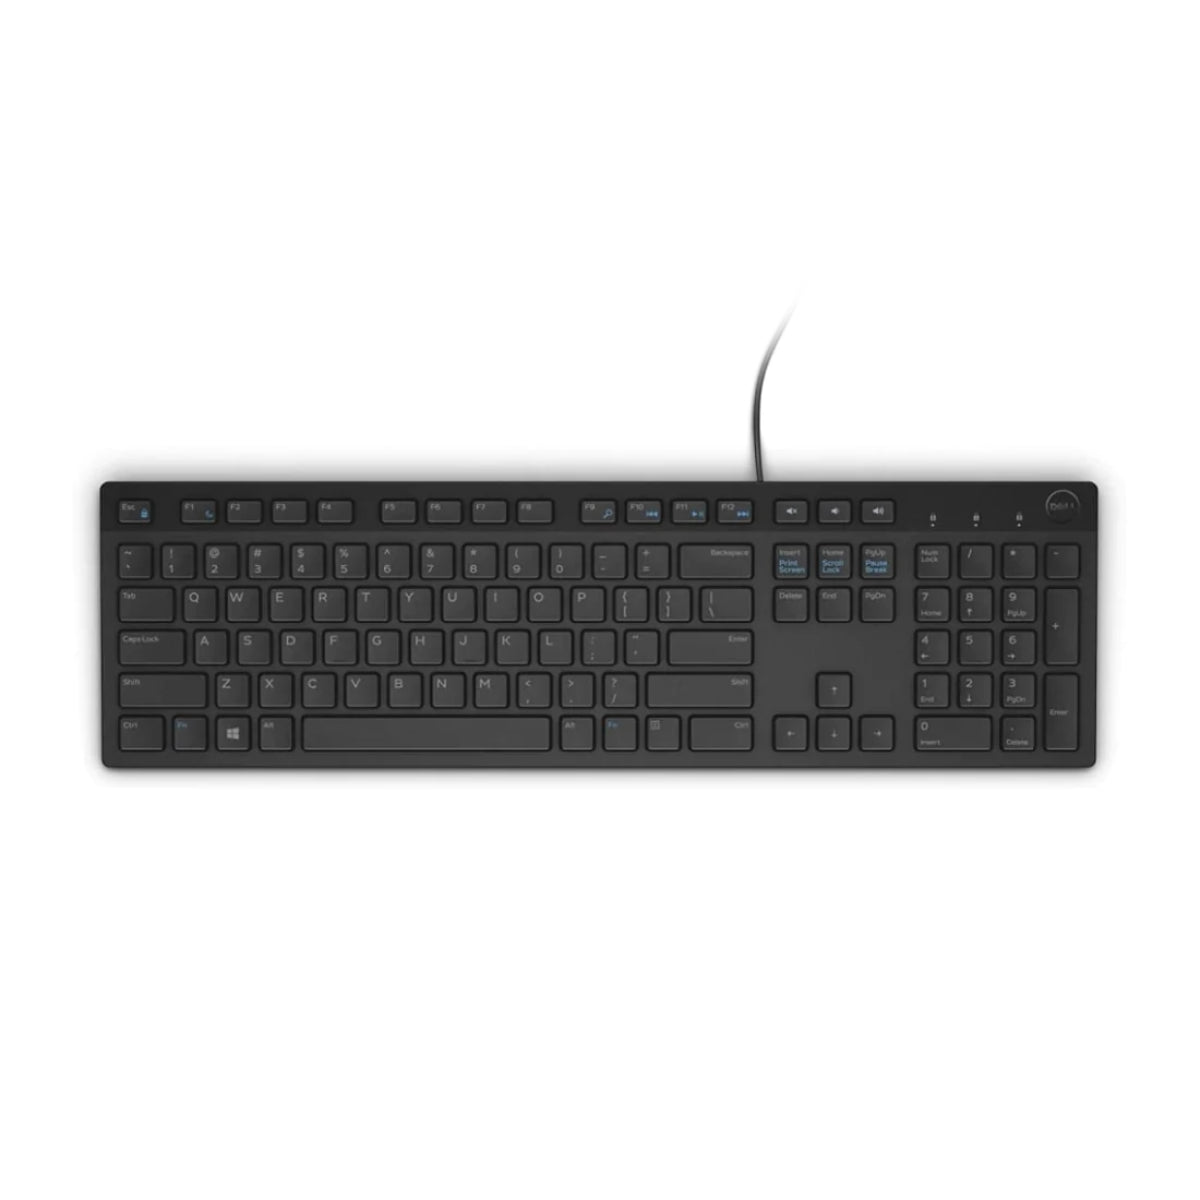 Dell KB216 Multimedia Wired Keyboard - Black - كييبورد - Store 974 | ستور ٩٧٤